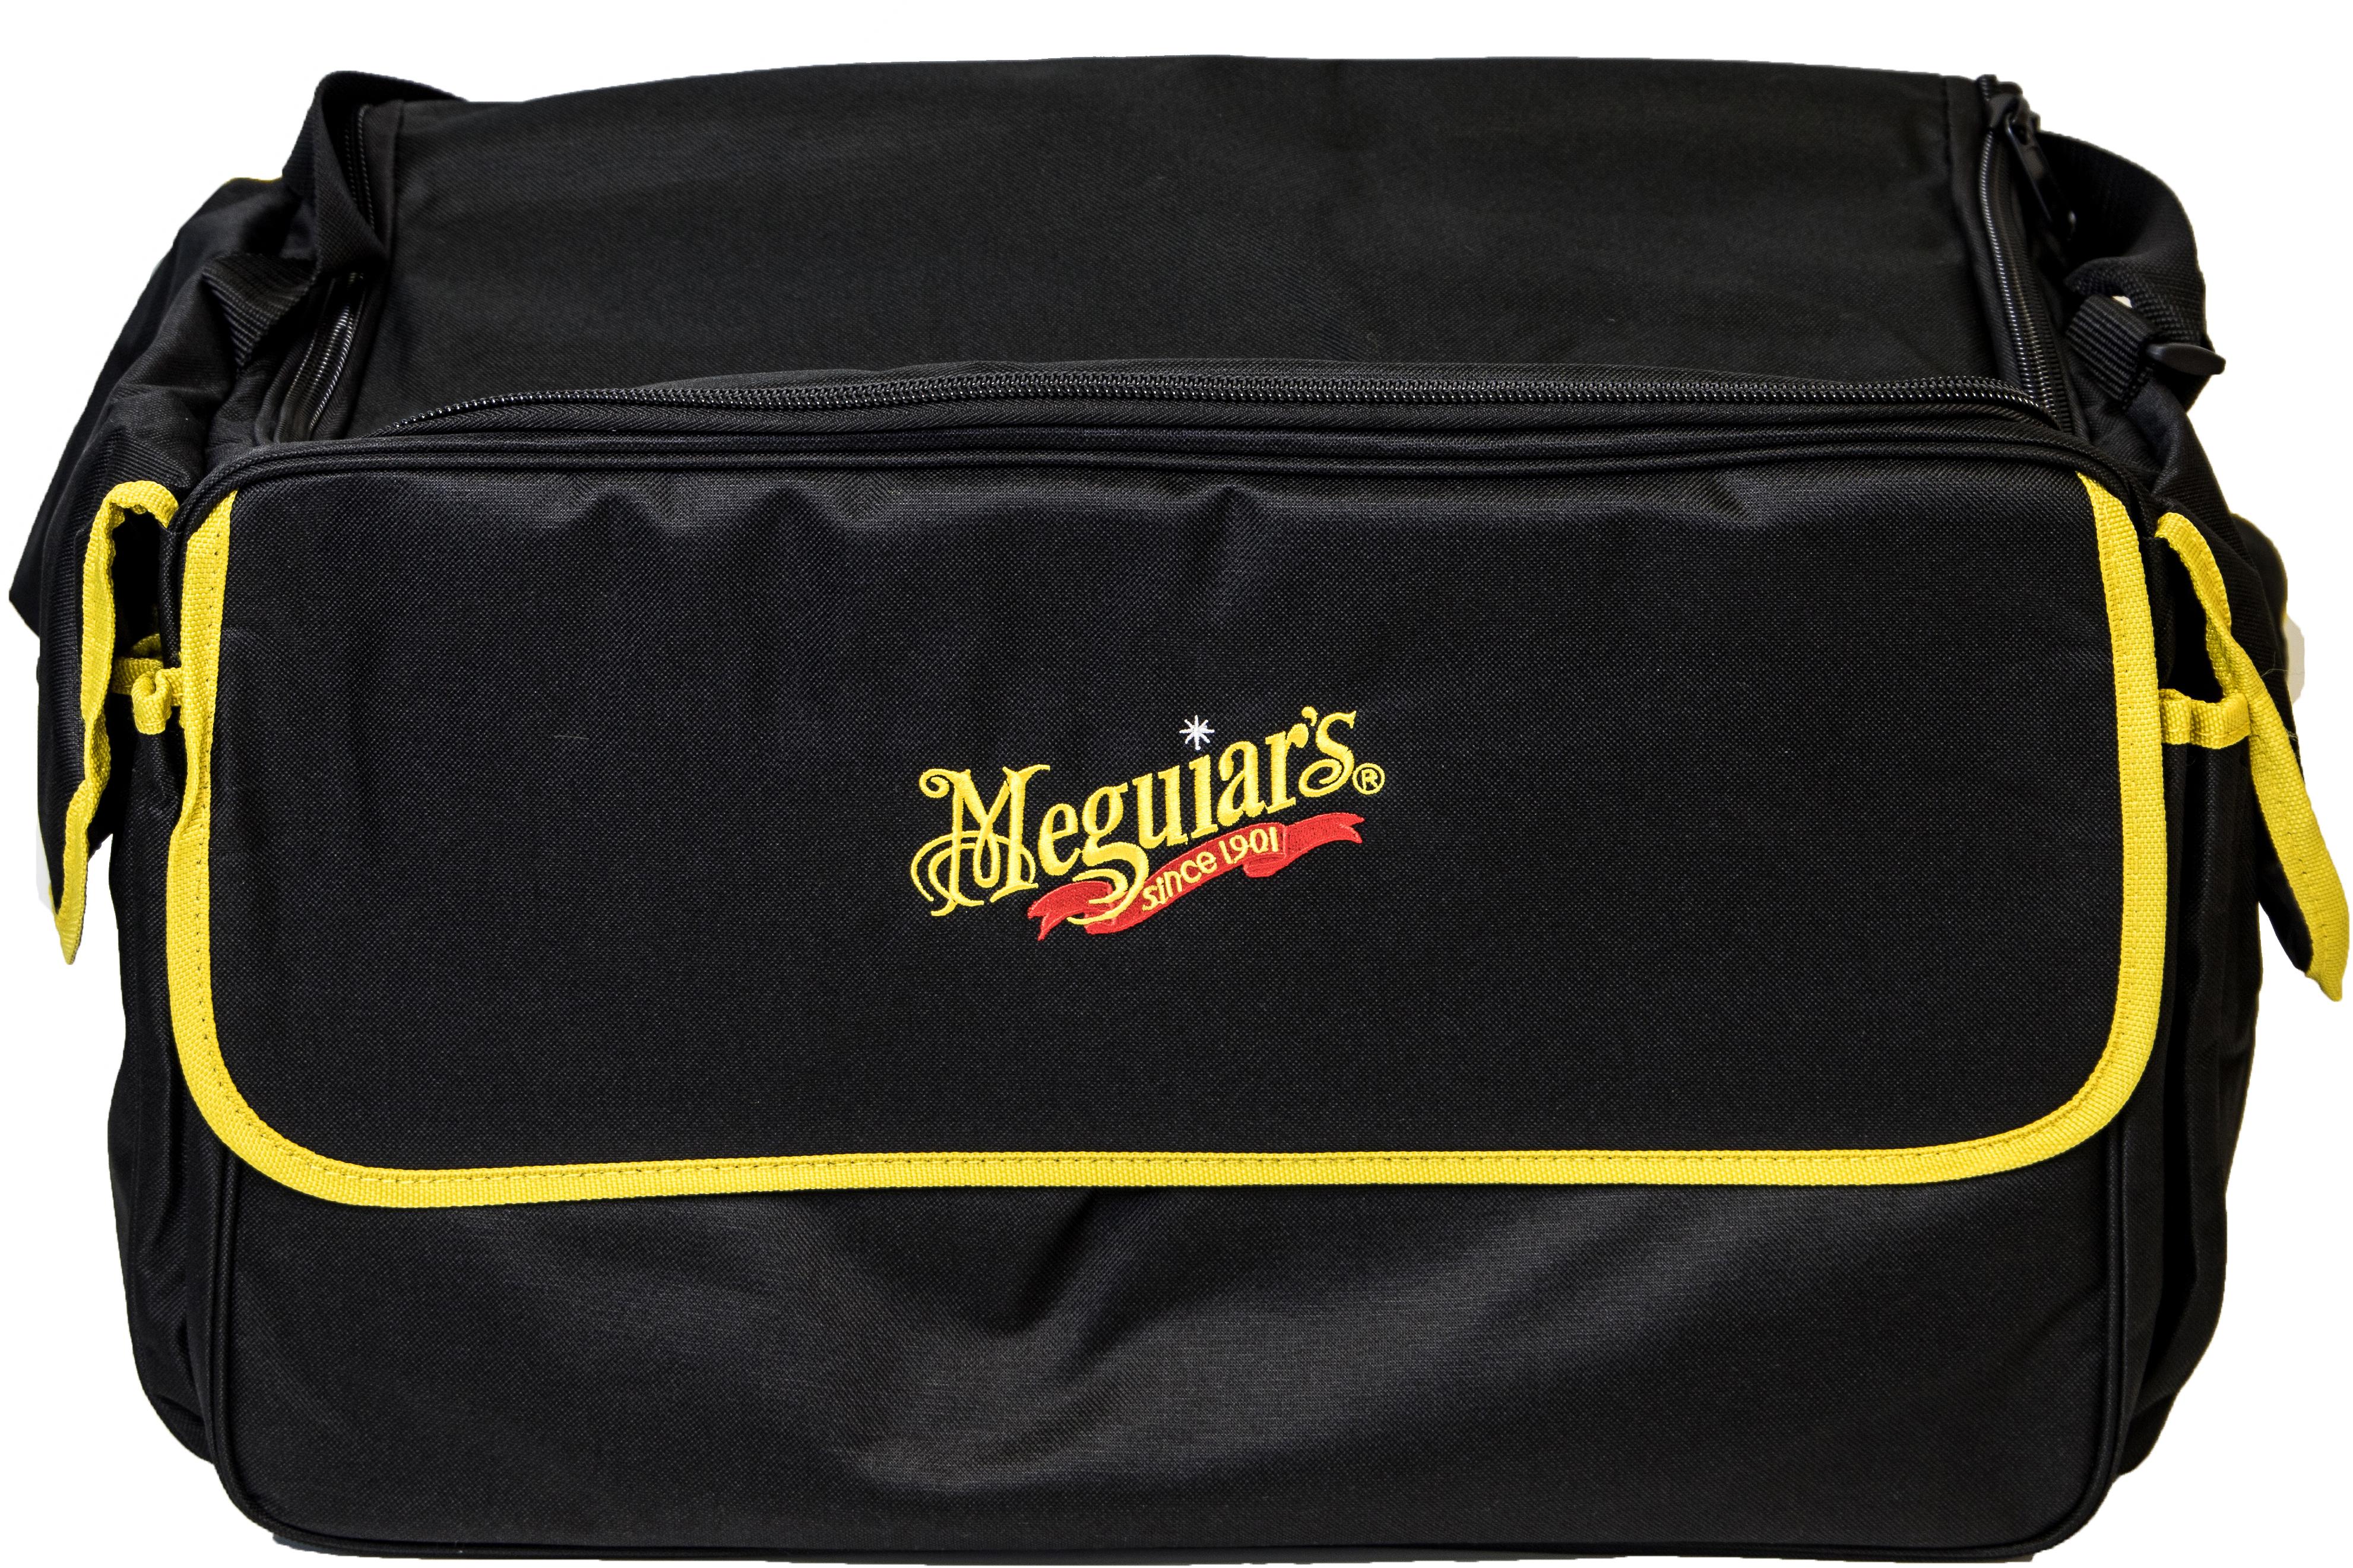 Meguiar's Black Detailing Kit Bag